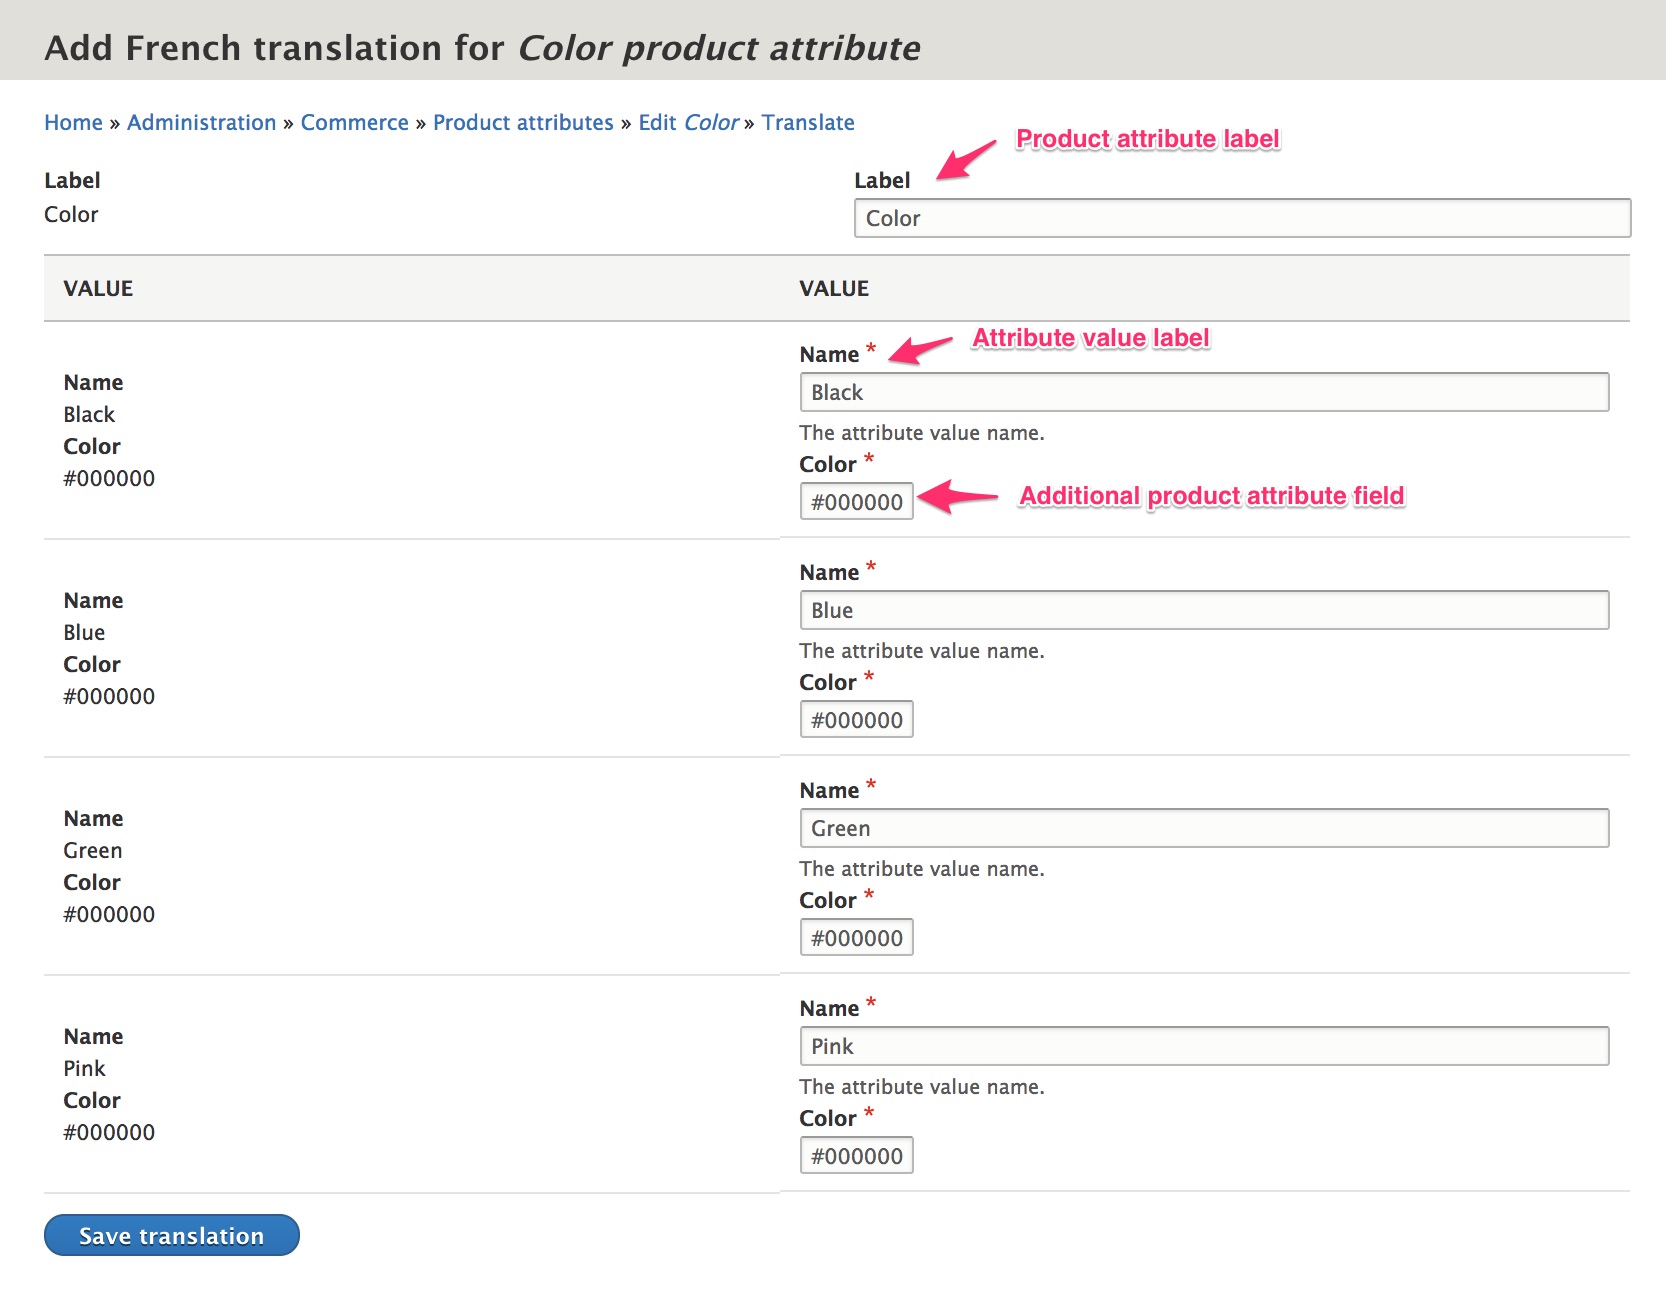 Add product attribute translations